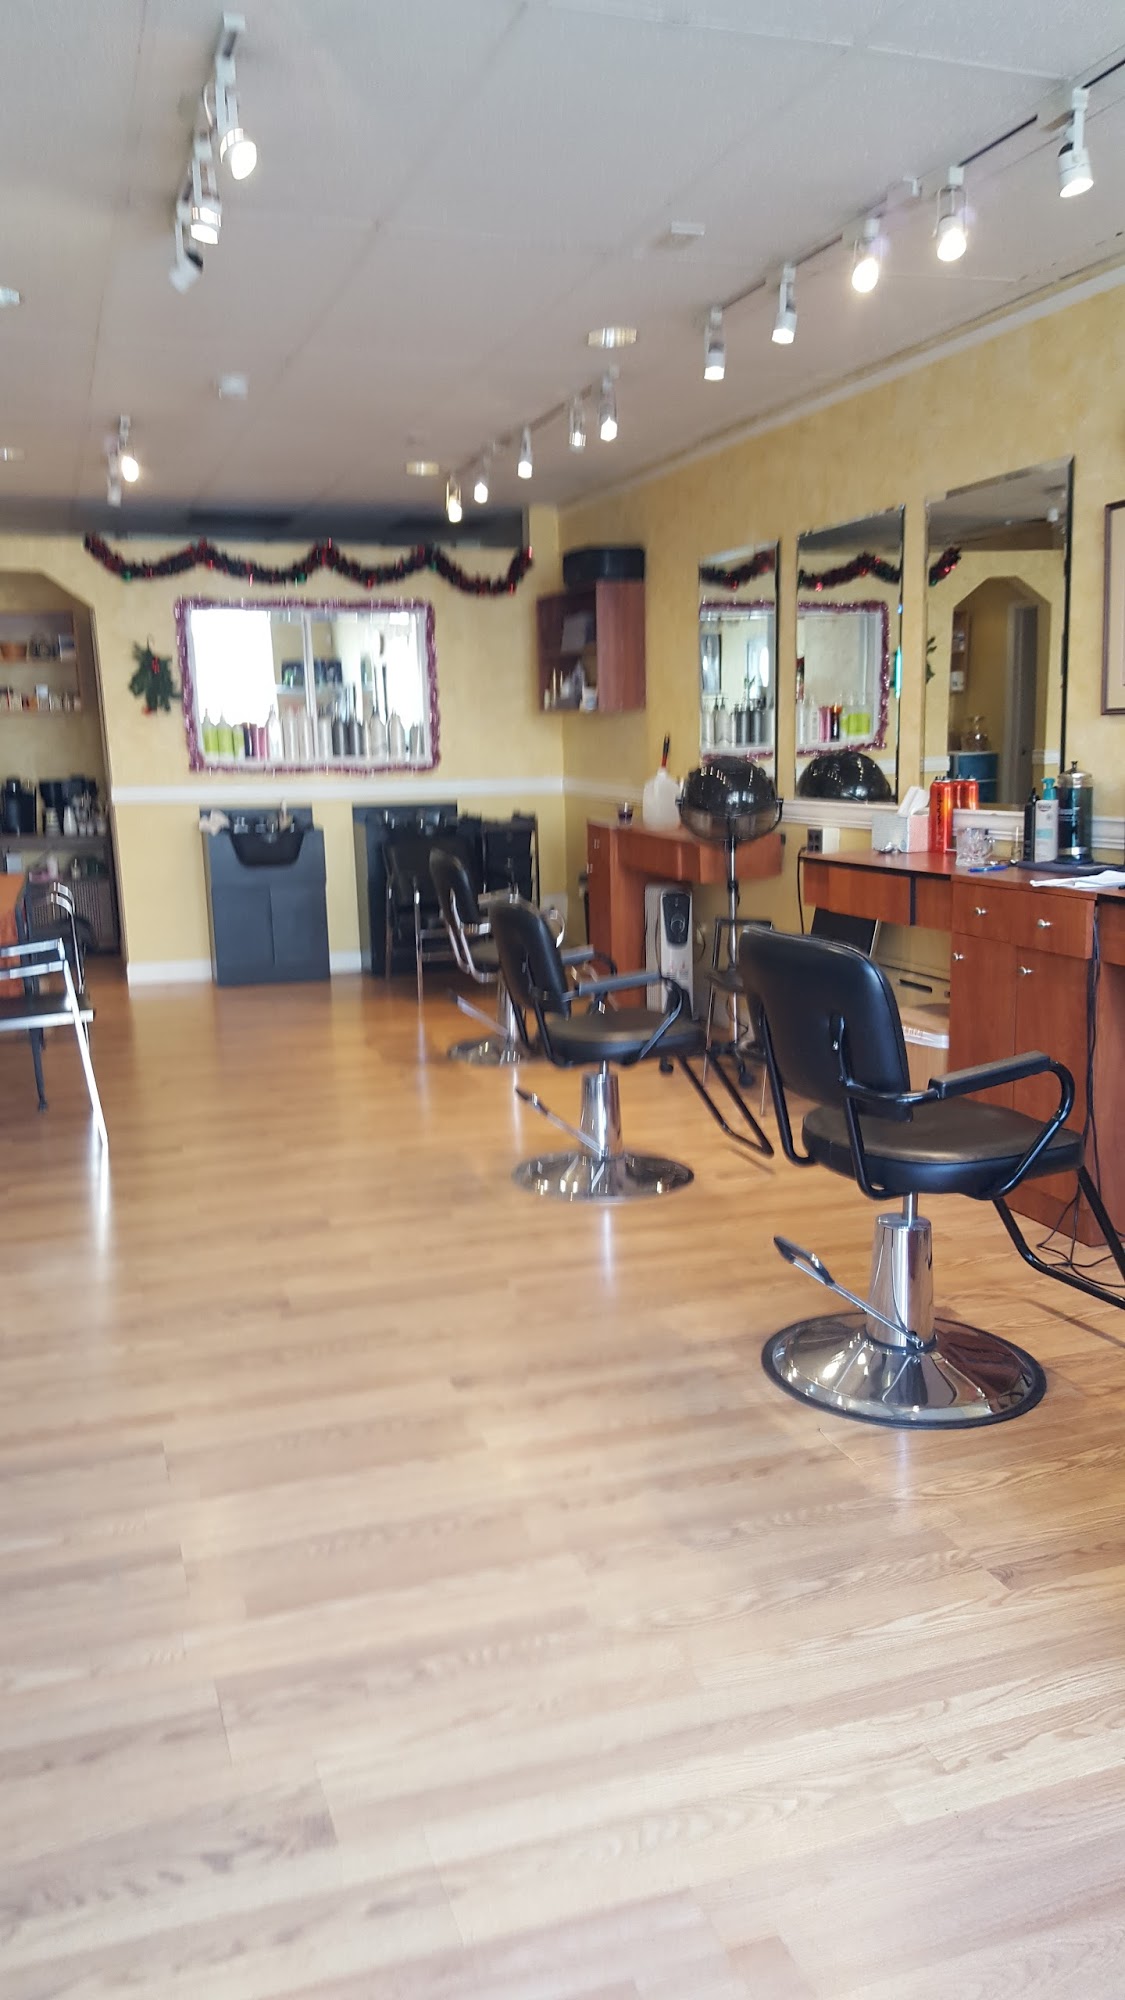 Irene's Hair Salon 16 Marble Ave, Pleasantville New York 10570